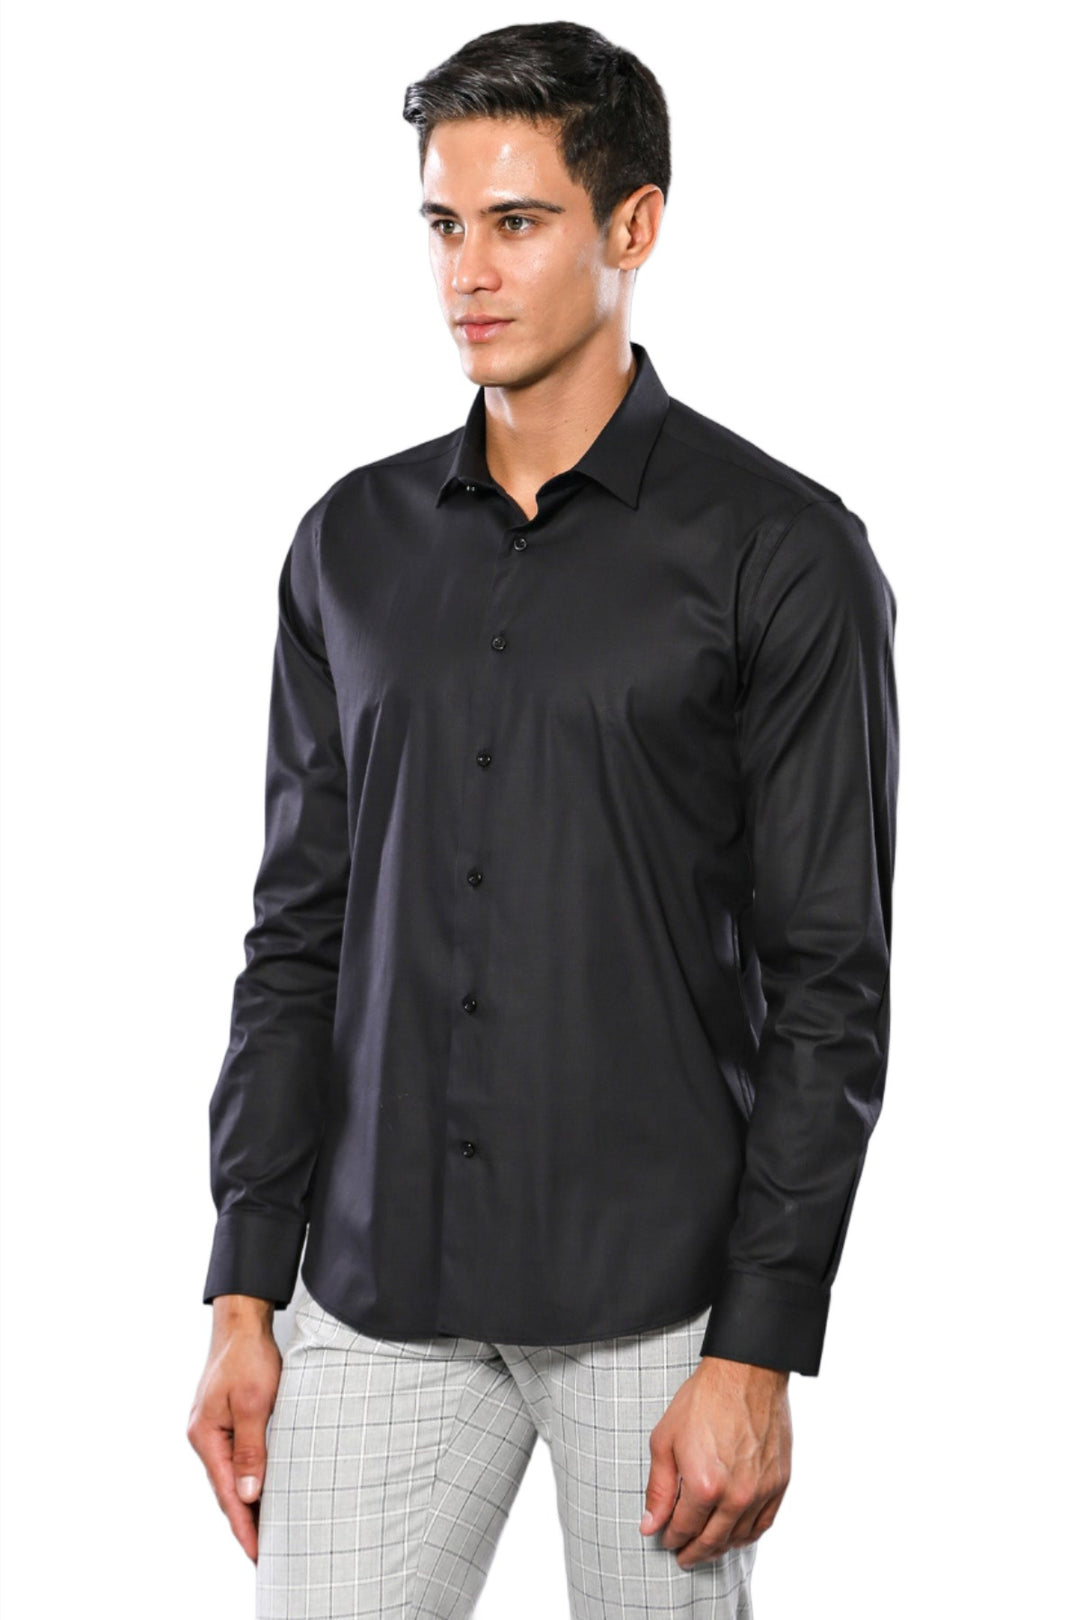 Buy LANBAOSI Men's Slim Fit Long Sleeves Button Down Dress Shirts